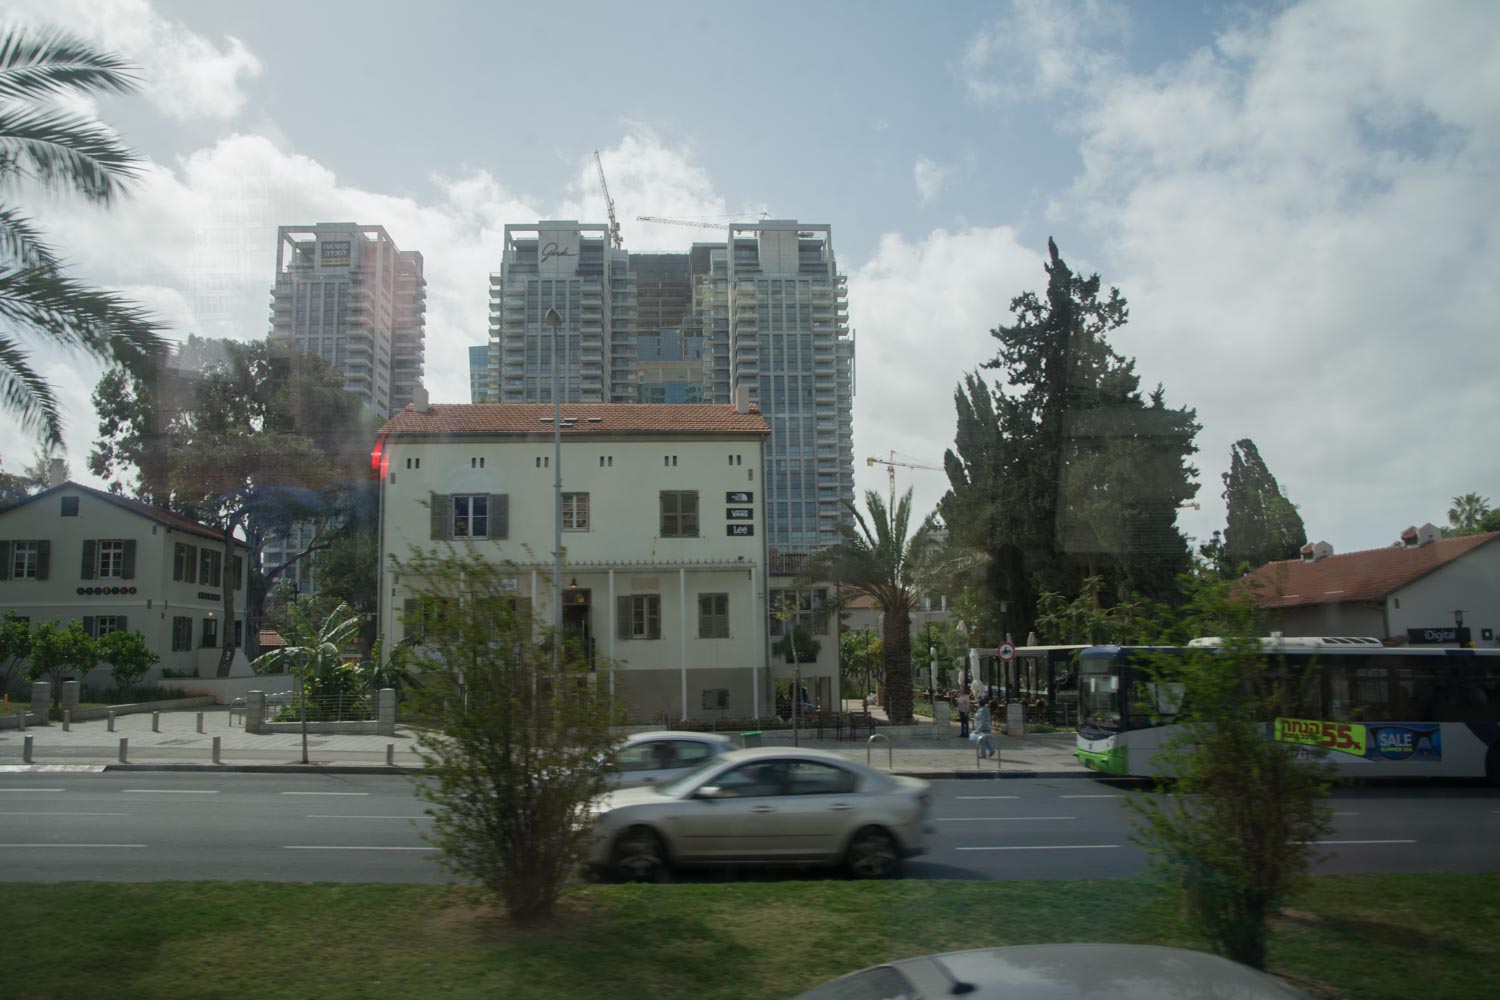 475. Tel Aviv